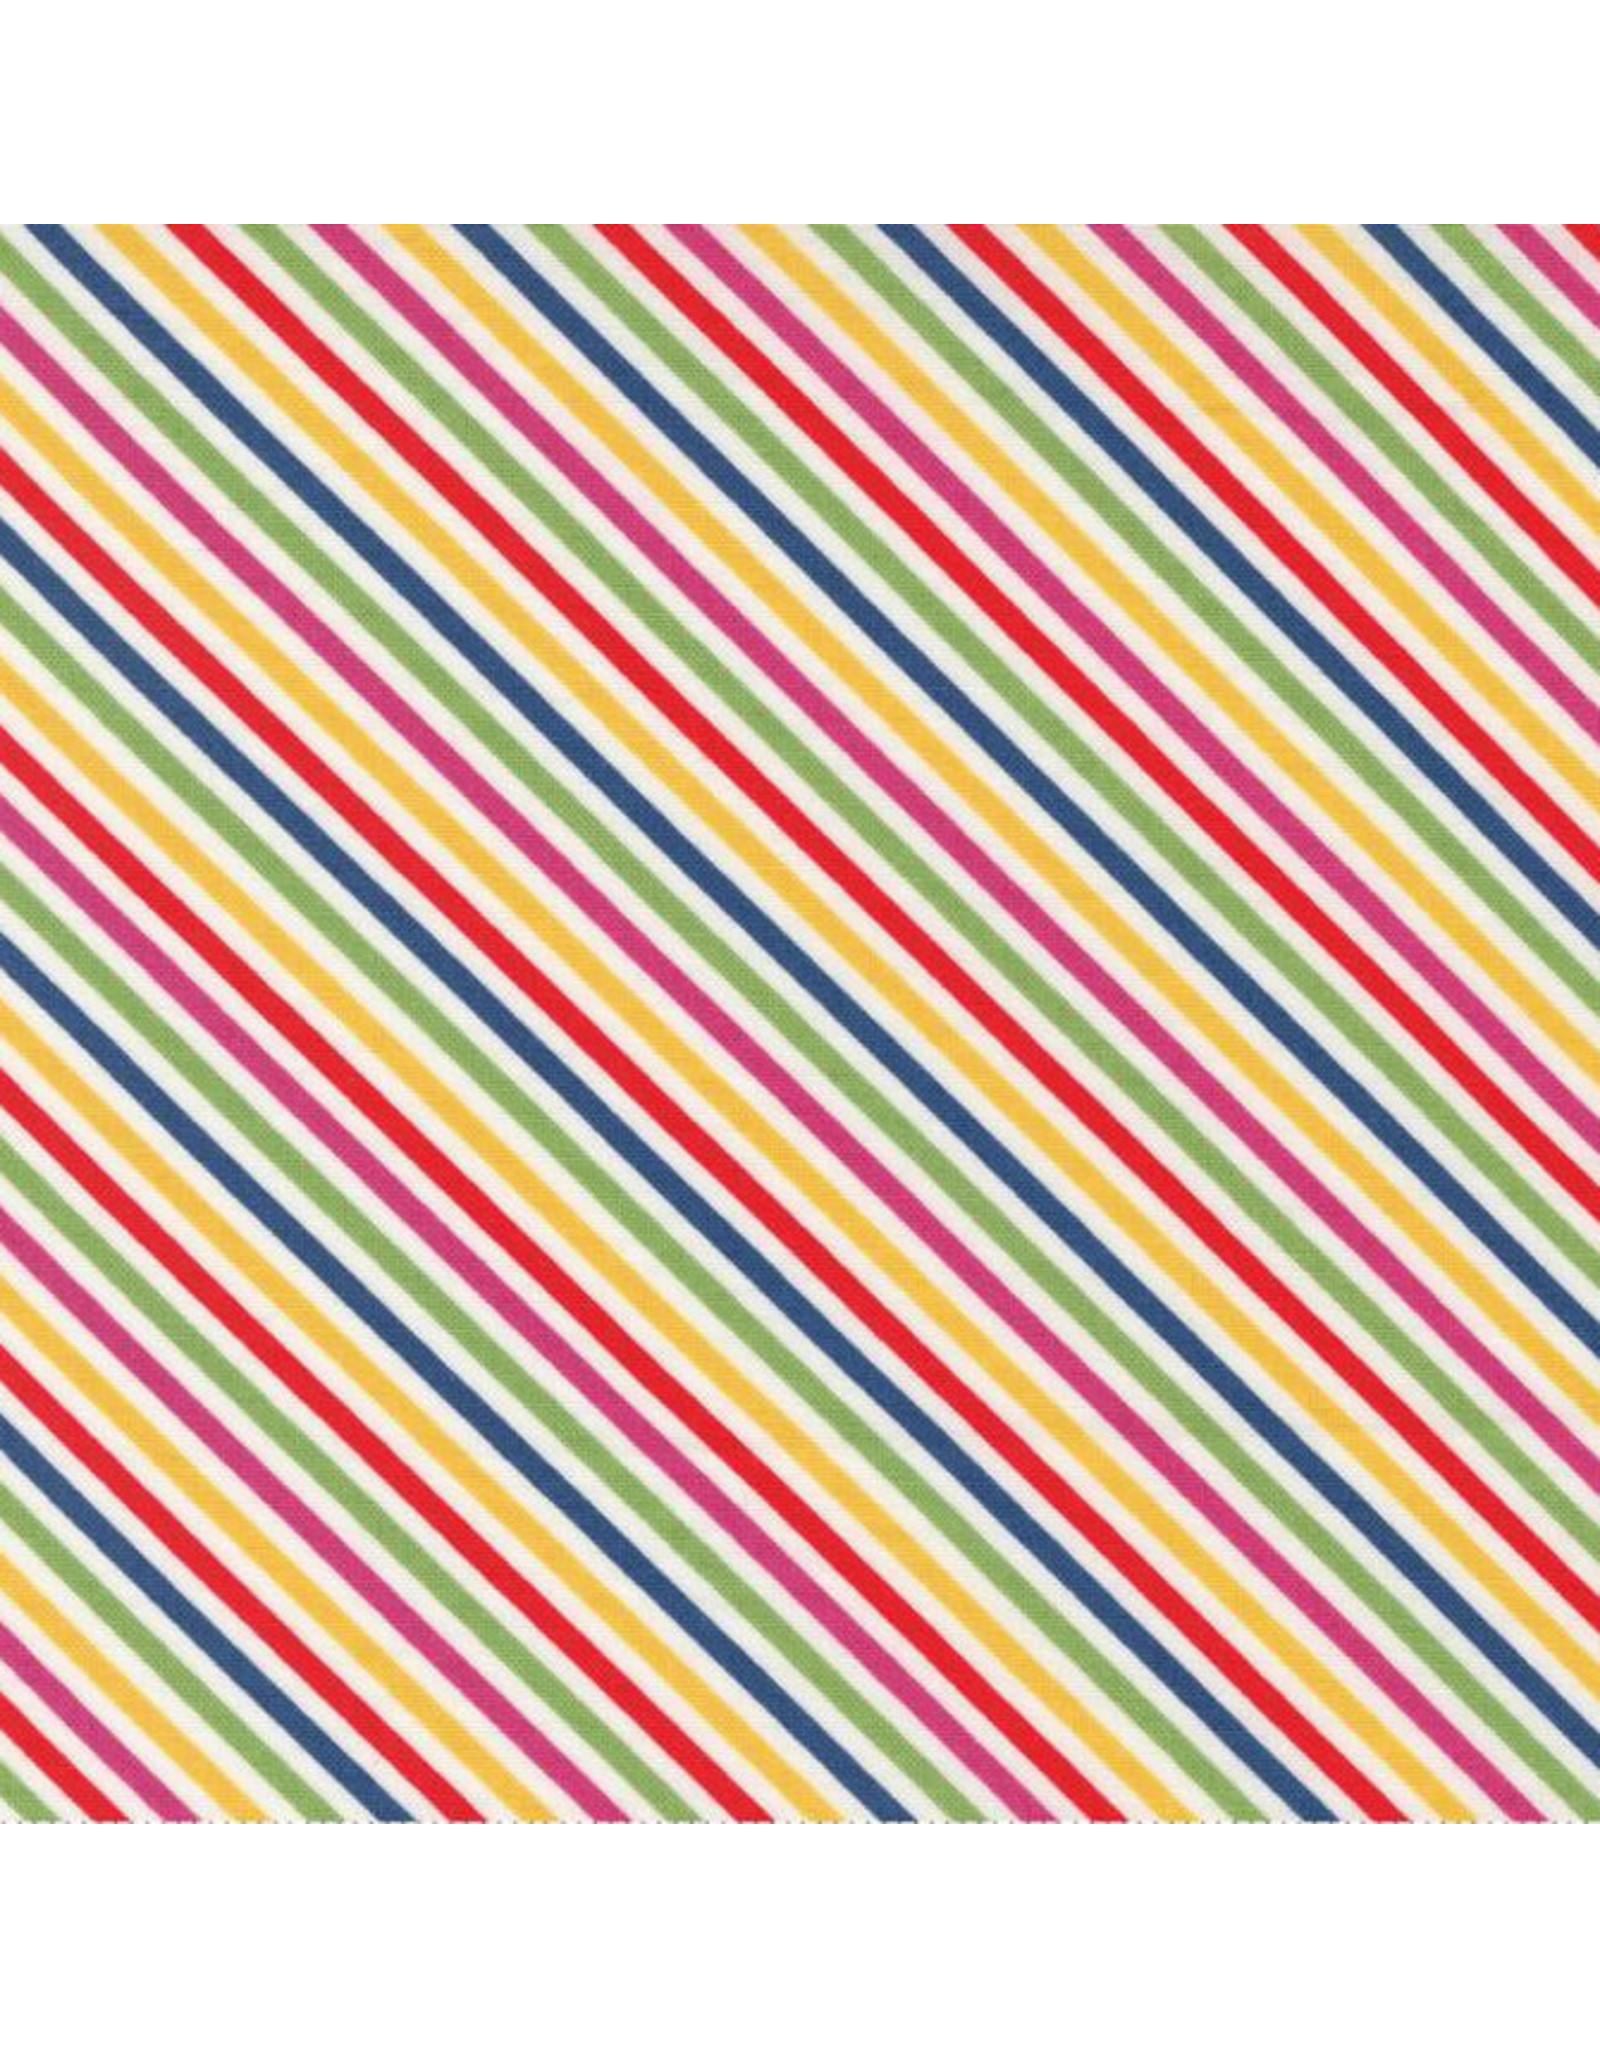 Moda Zinnia, Downpour Stripes in Rainbow, Fabric Half-Yards